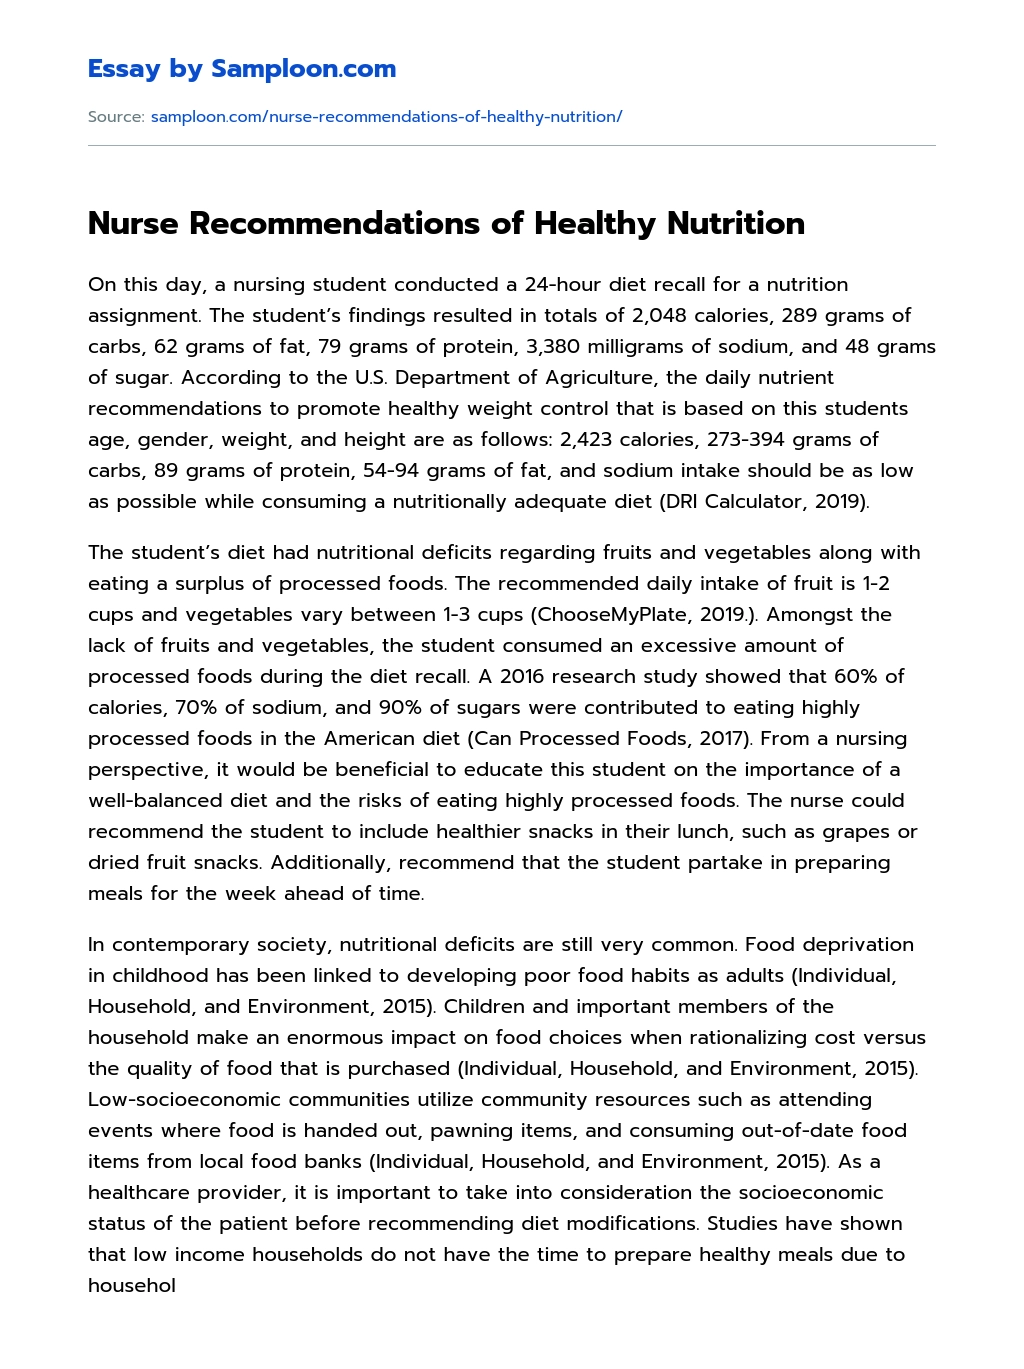 Nurse Recommendations of Healthy Nutrition  essay